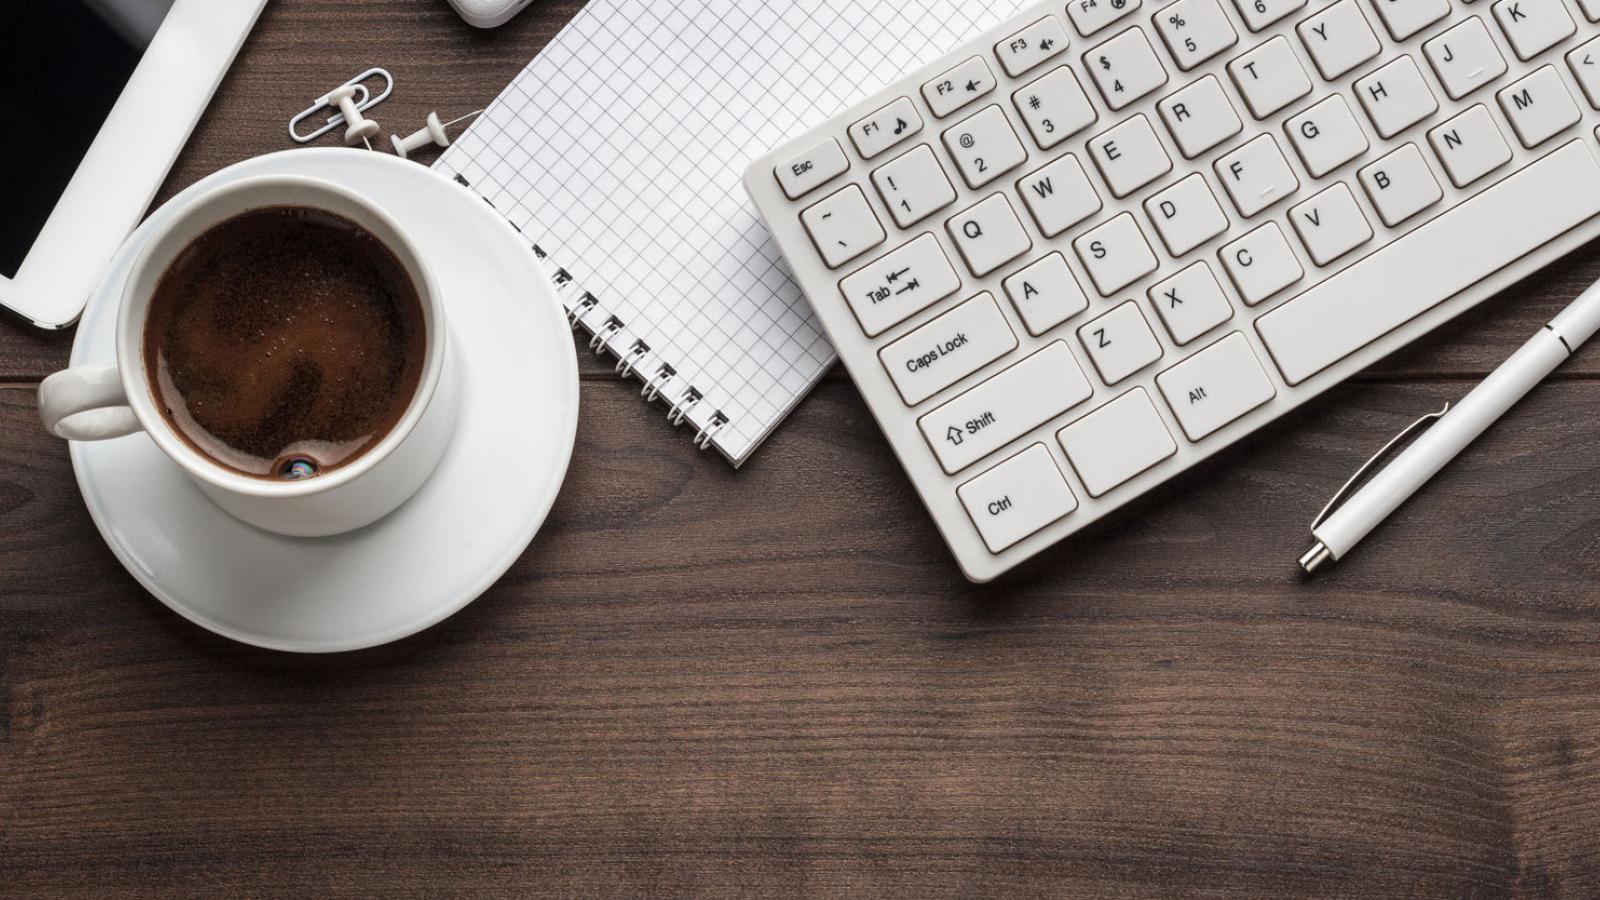 Image of a computer keyboard and coffee mug.